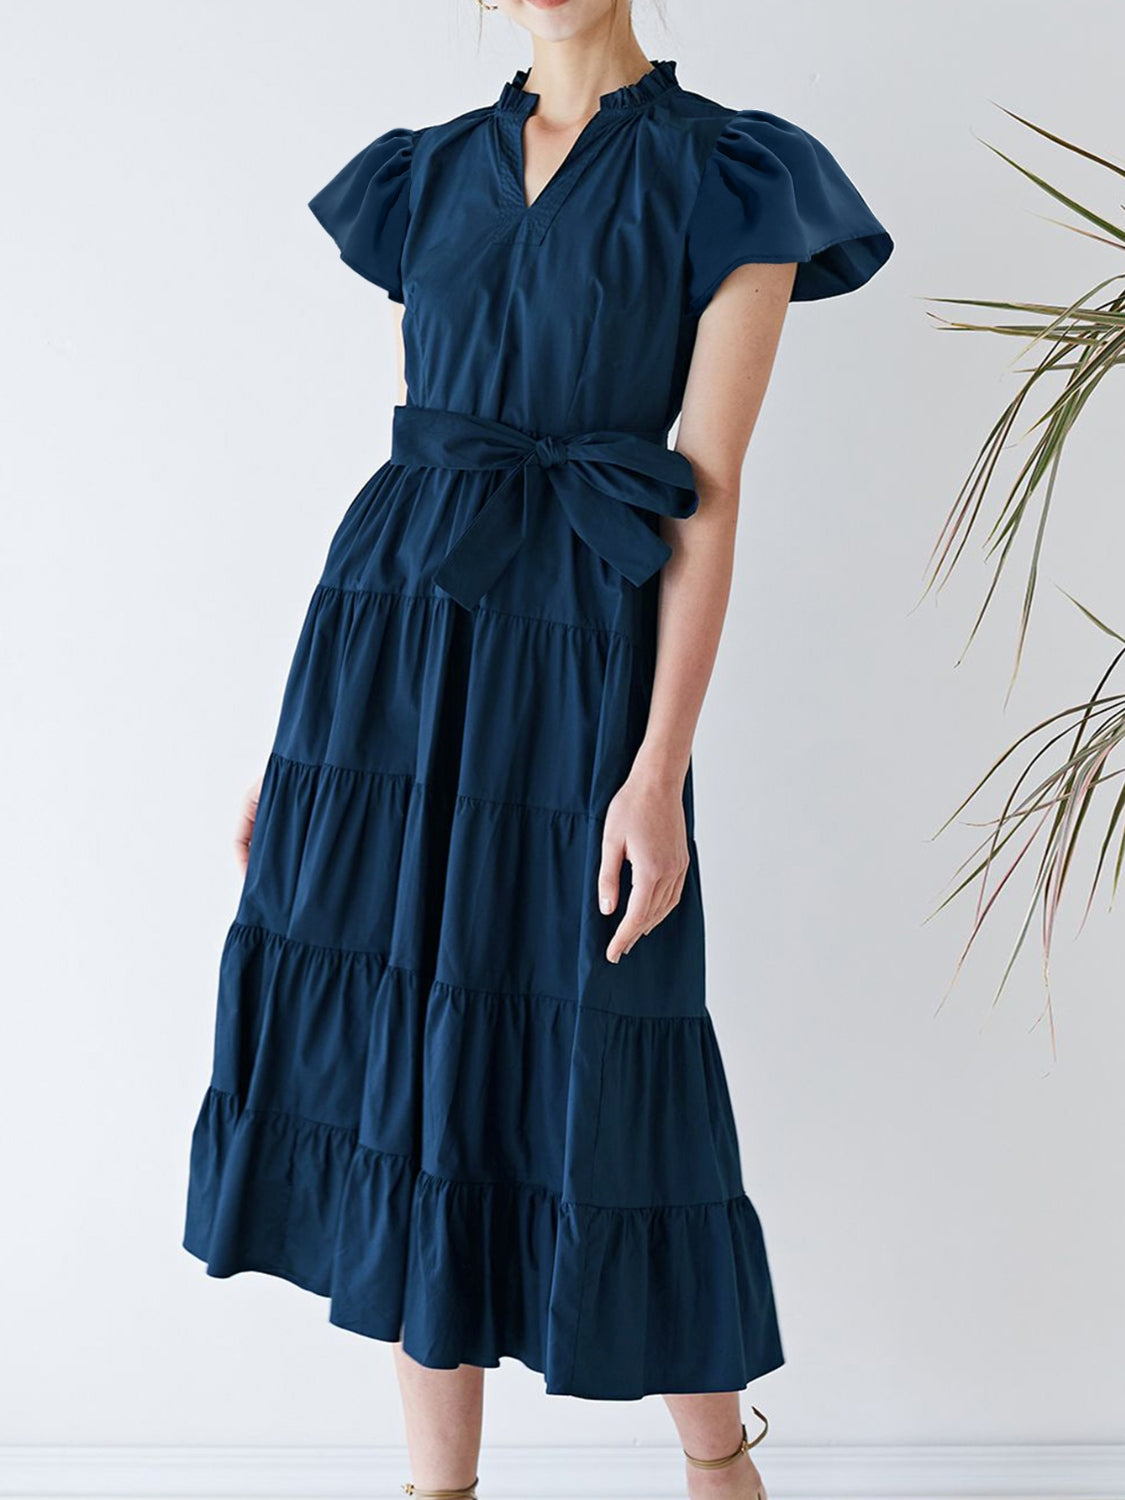 TEEK - Dark Blue Ruched Tiered Notched Short Sleeve Dress DRESS TEEK Trend   